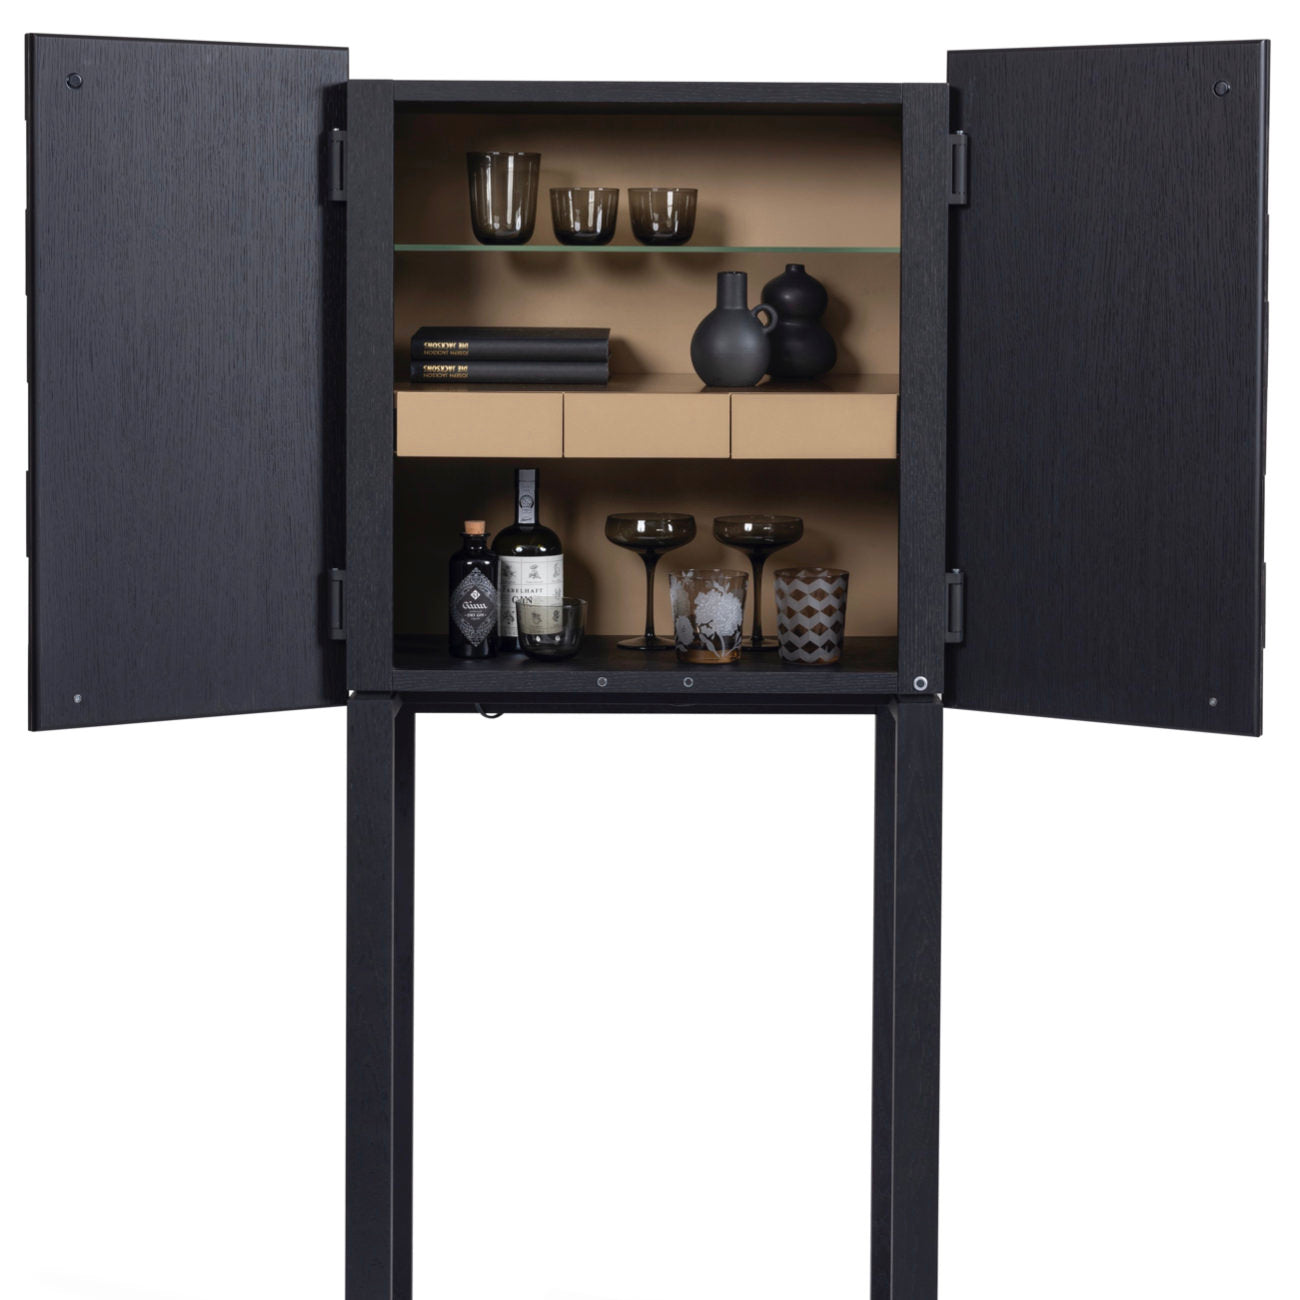 SHAPE 11 cabinet with drawers - Christine Kröncke Interior Design